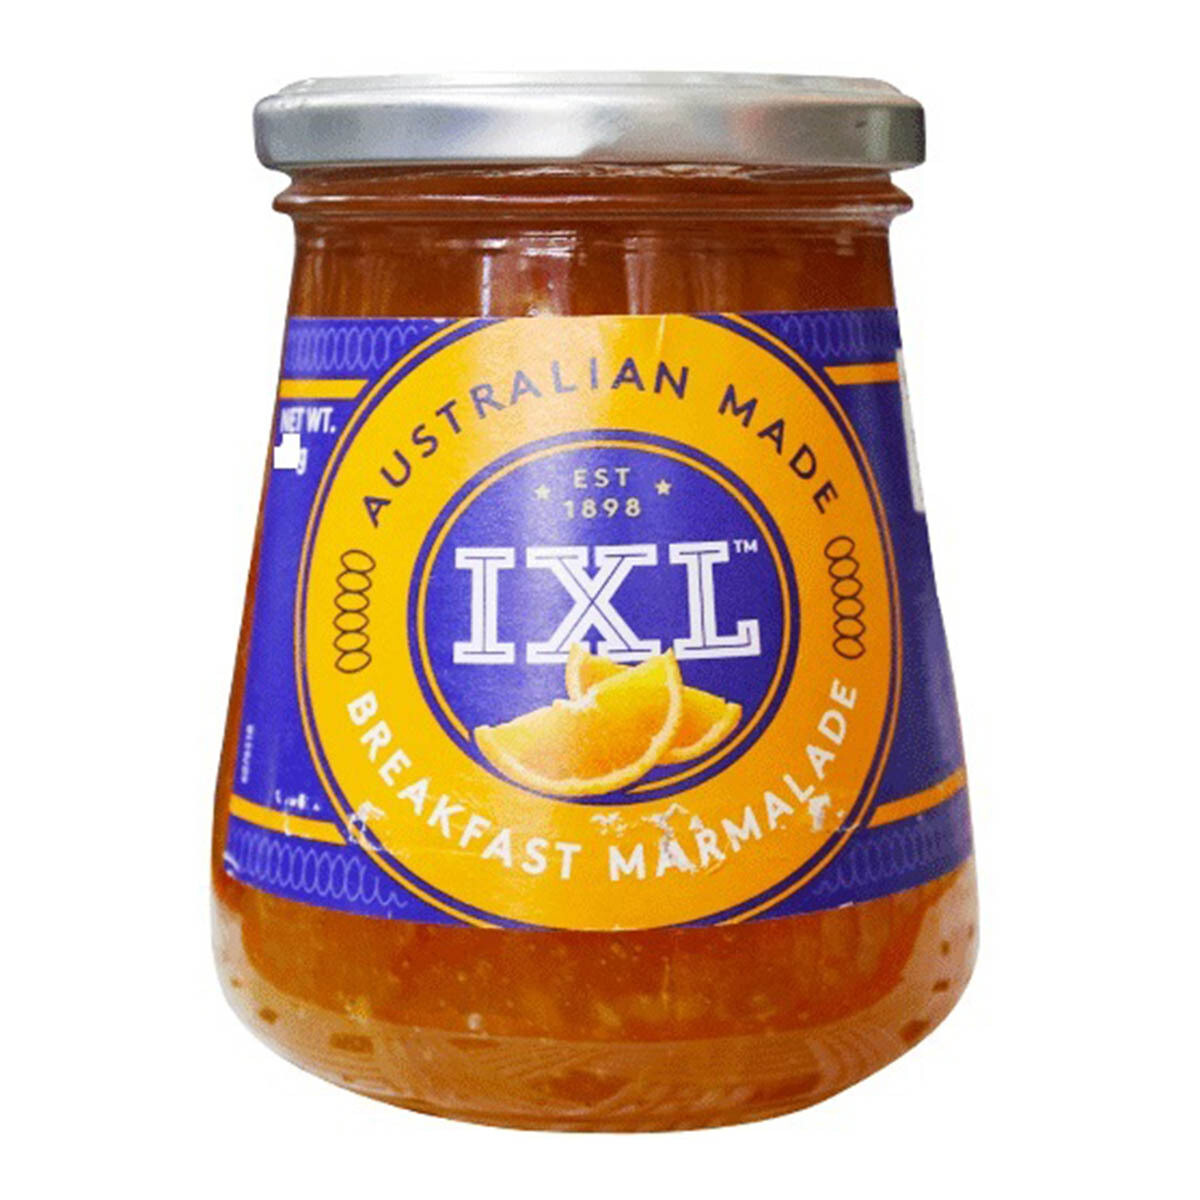 IXL Breakfast Marmalade Jam - 480gm